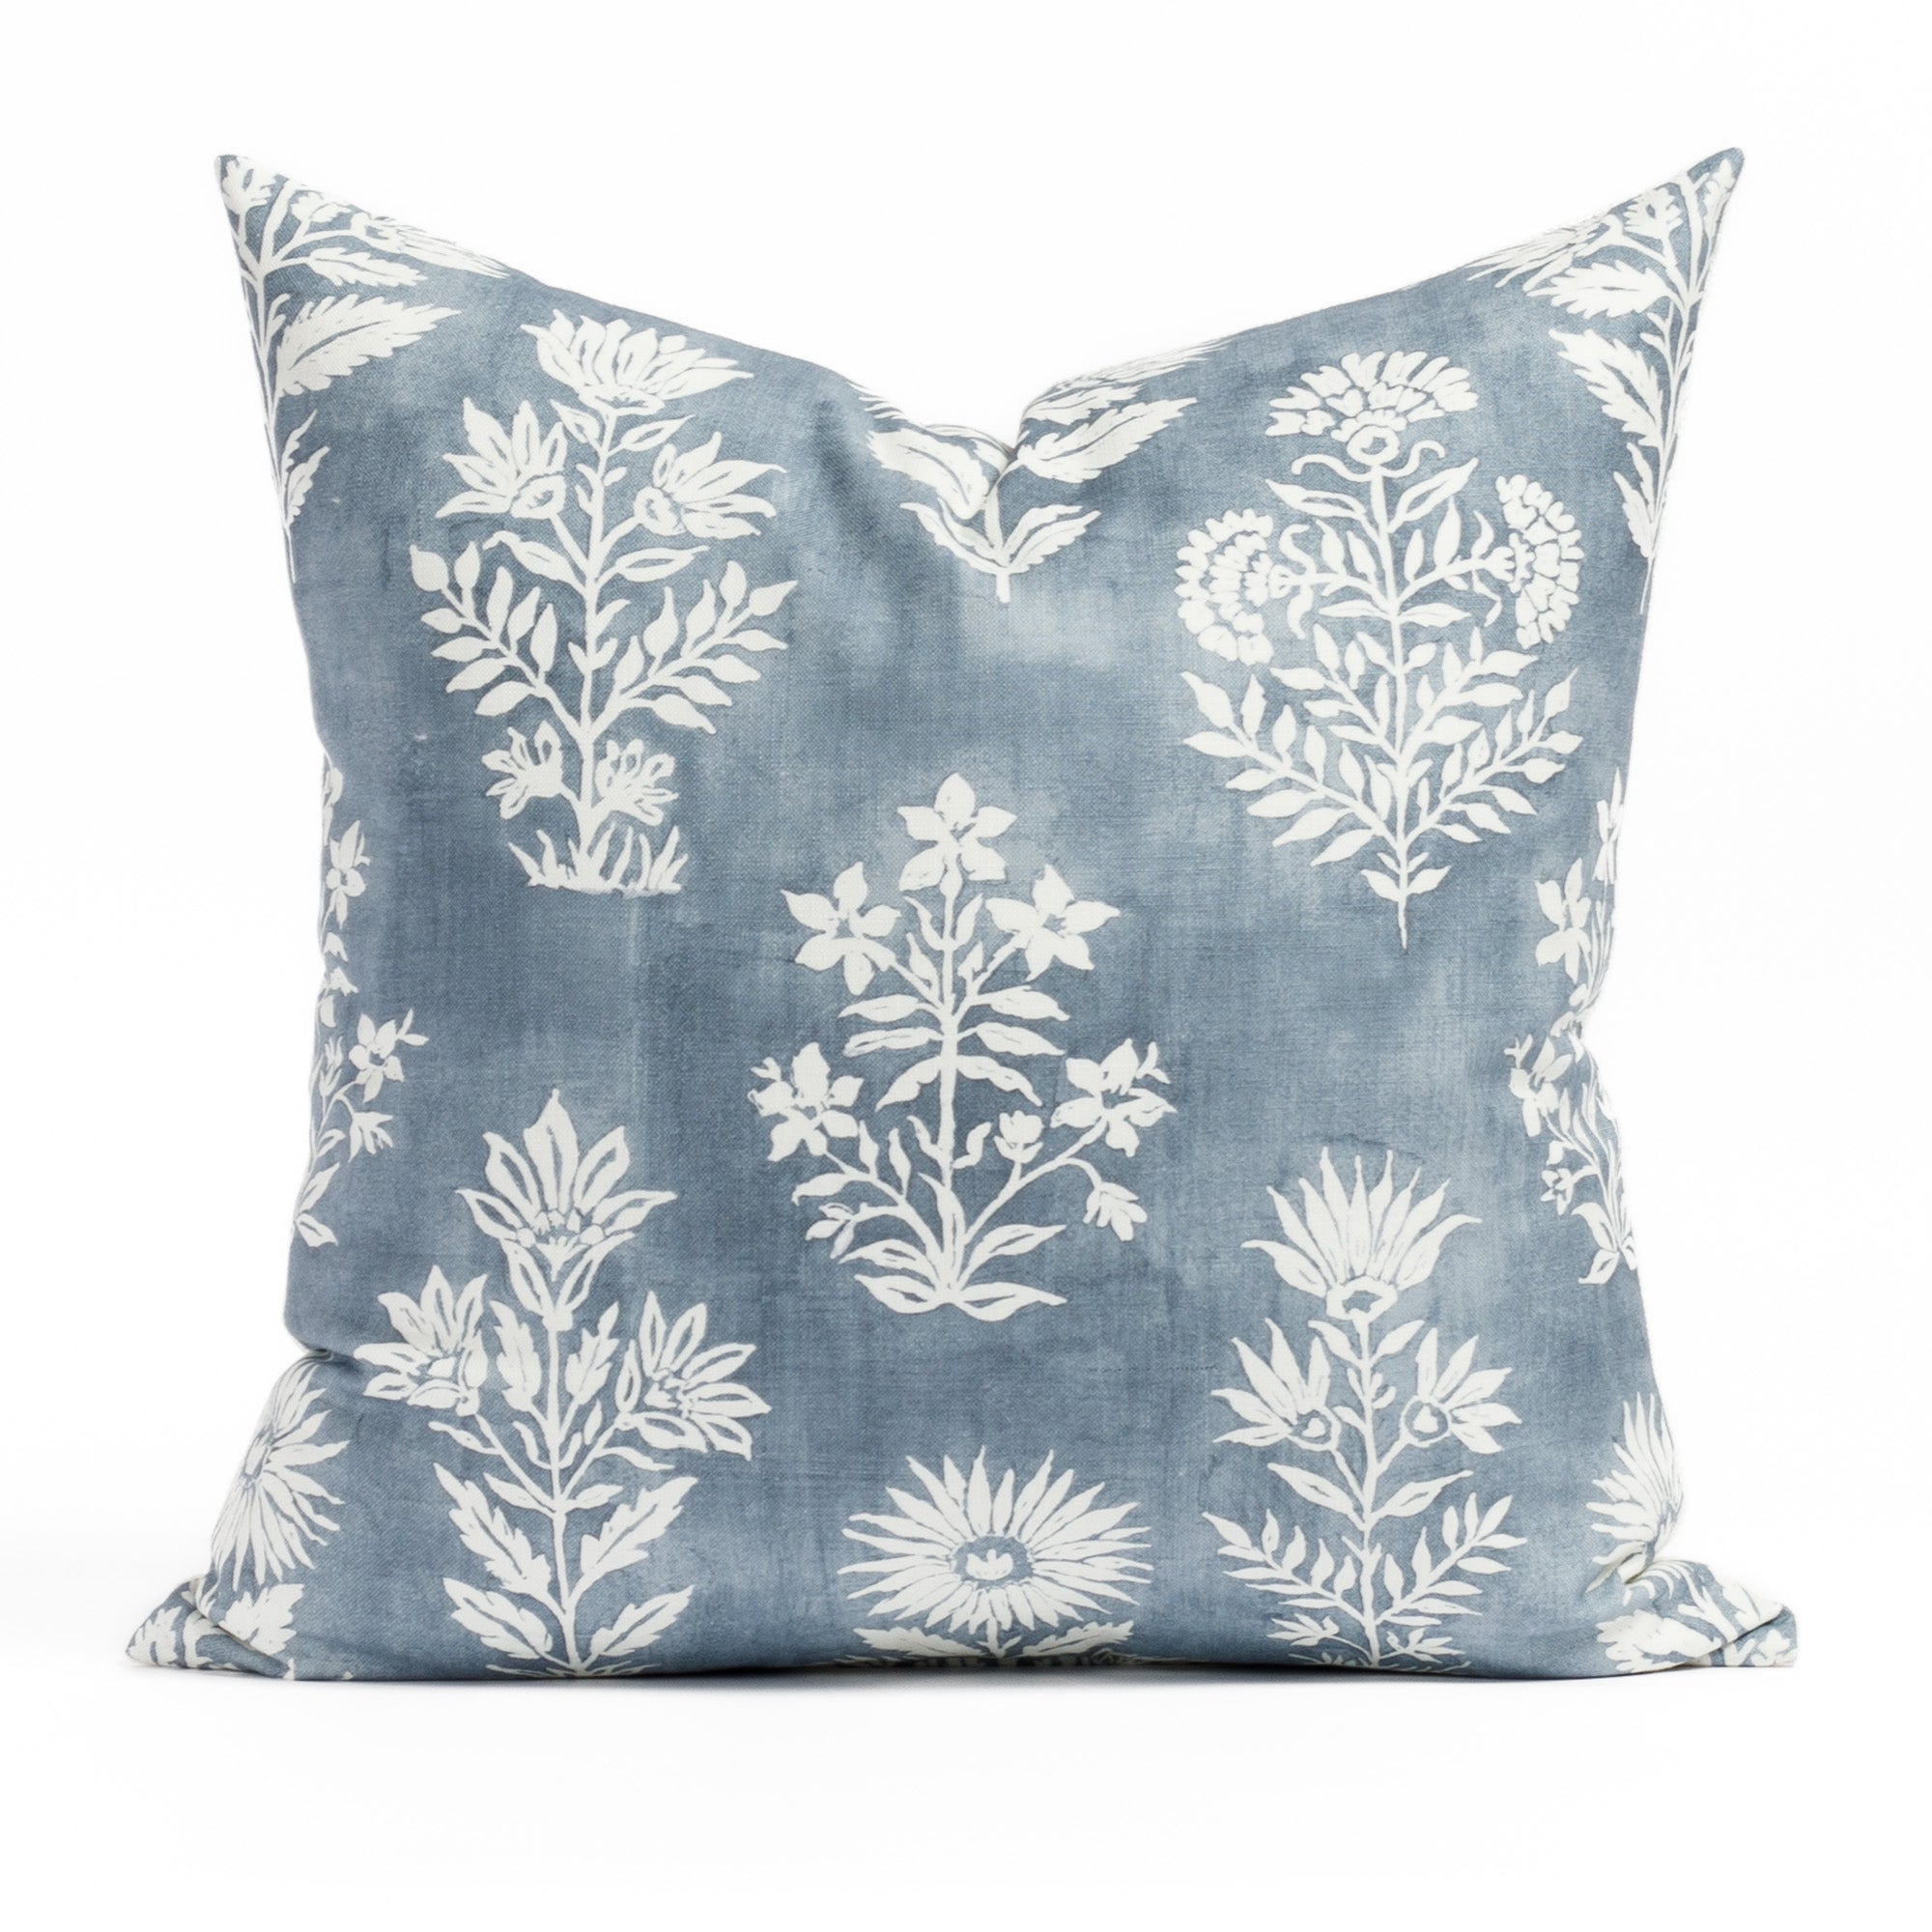 Flora Denim Blue 20x20 Pillow, an indigo blue and white batik floral print throw pillow from Tonic Living